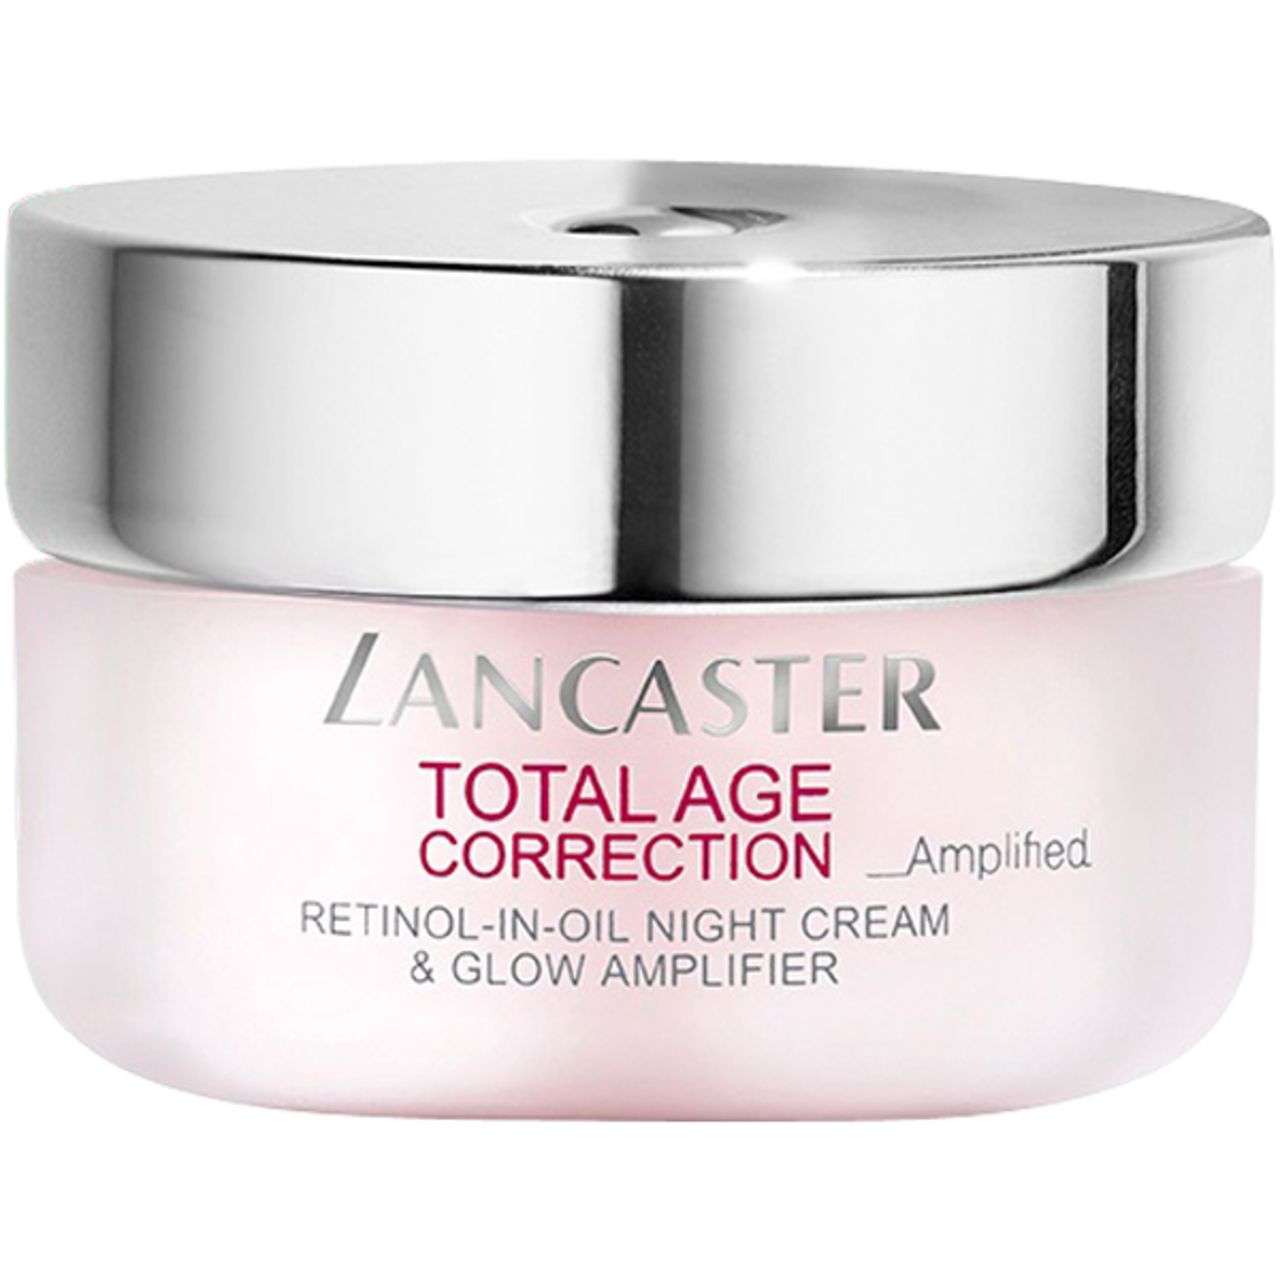 Lancaster, Total Age Correction Retinol-in-Oil Night Cream & Glow Amplifier